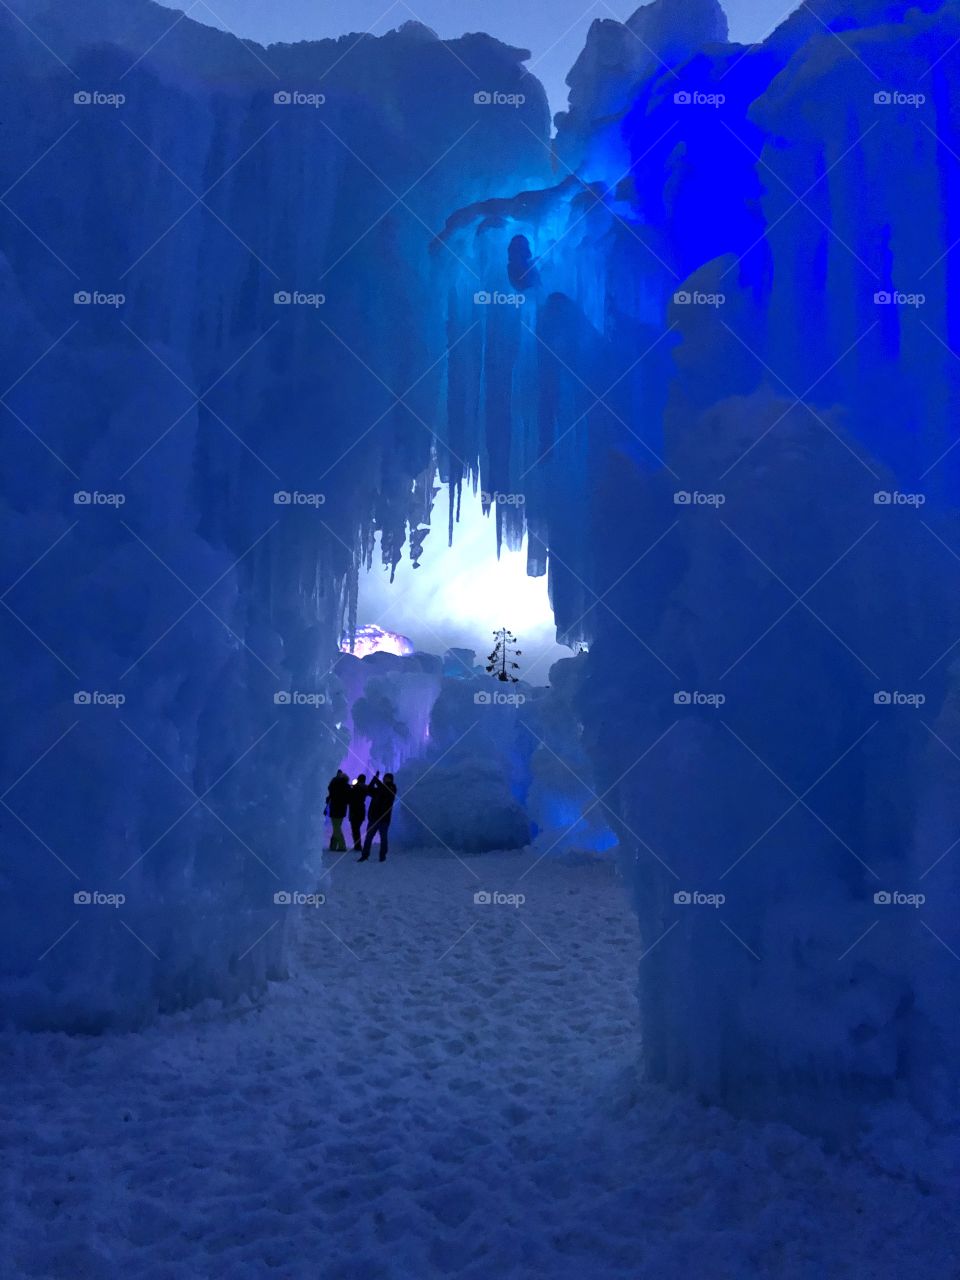 The frozen ice gateway.